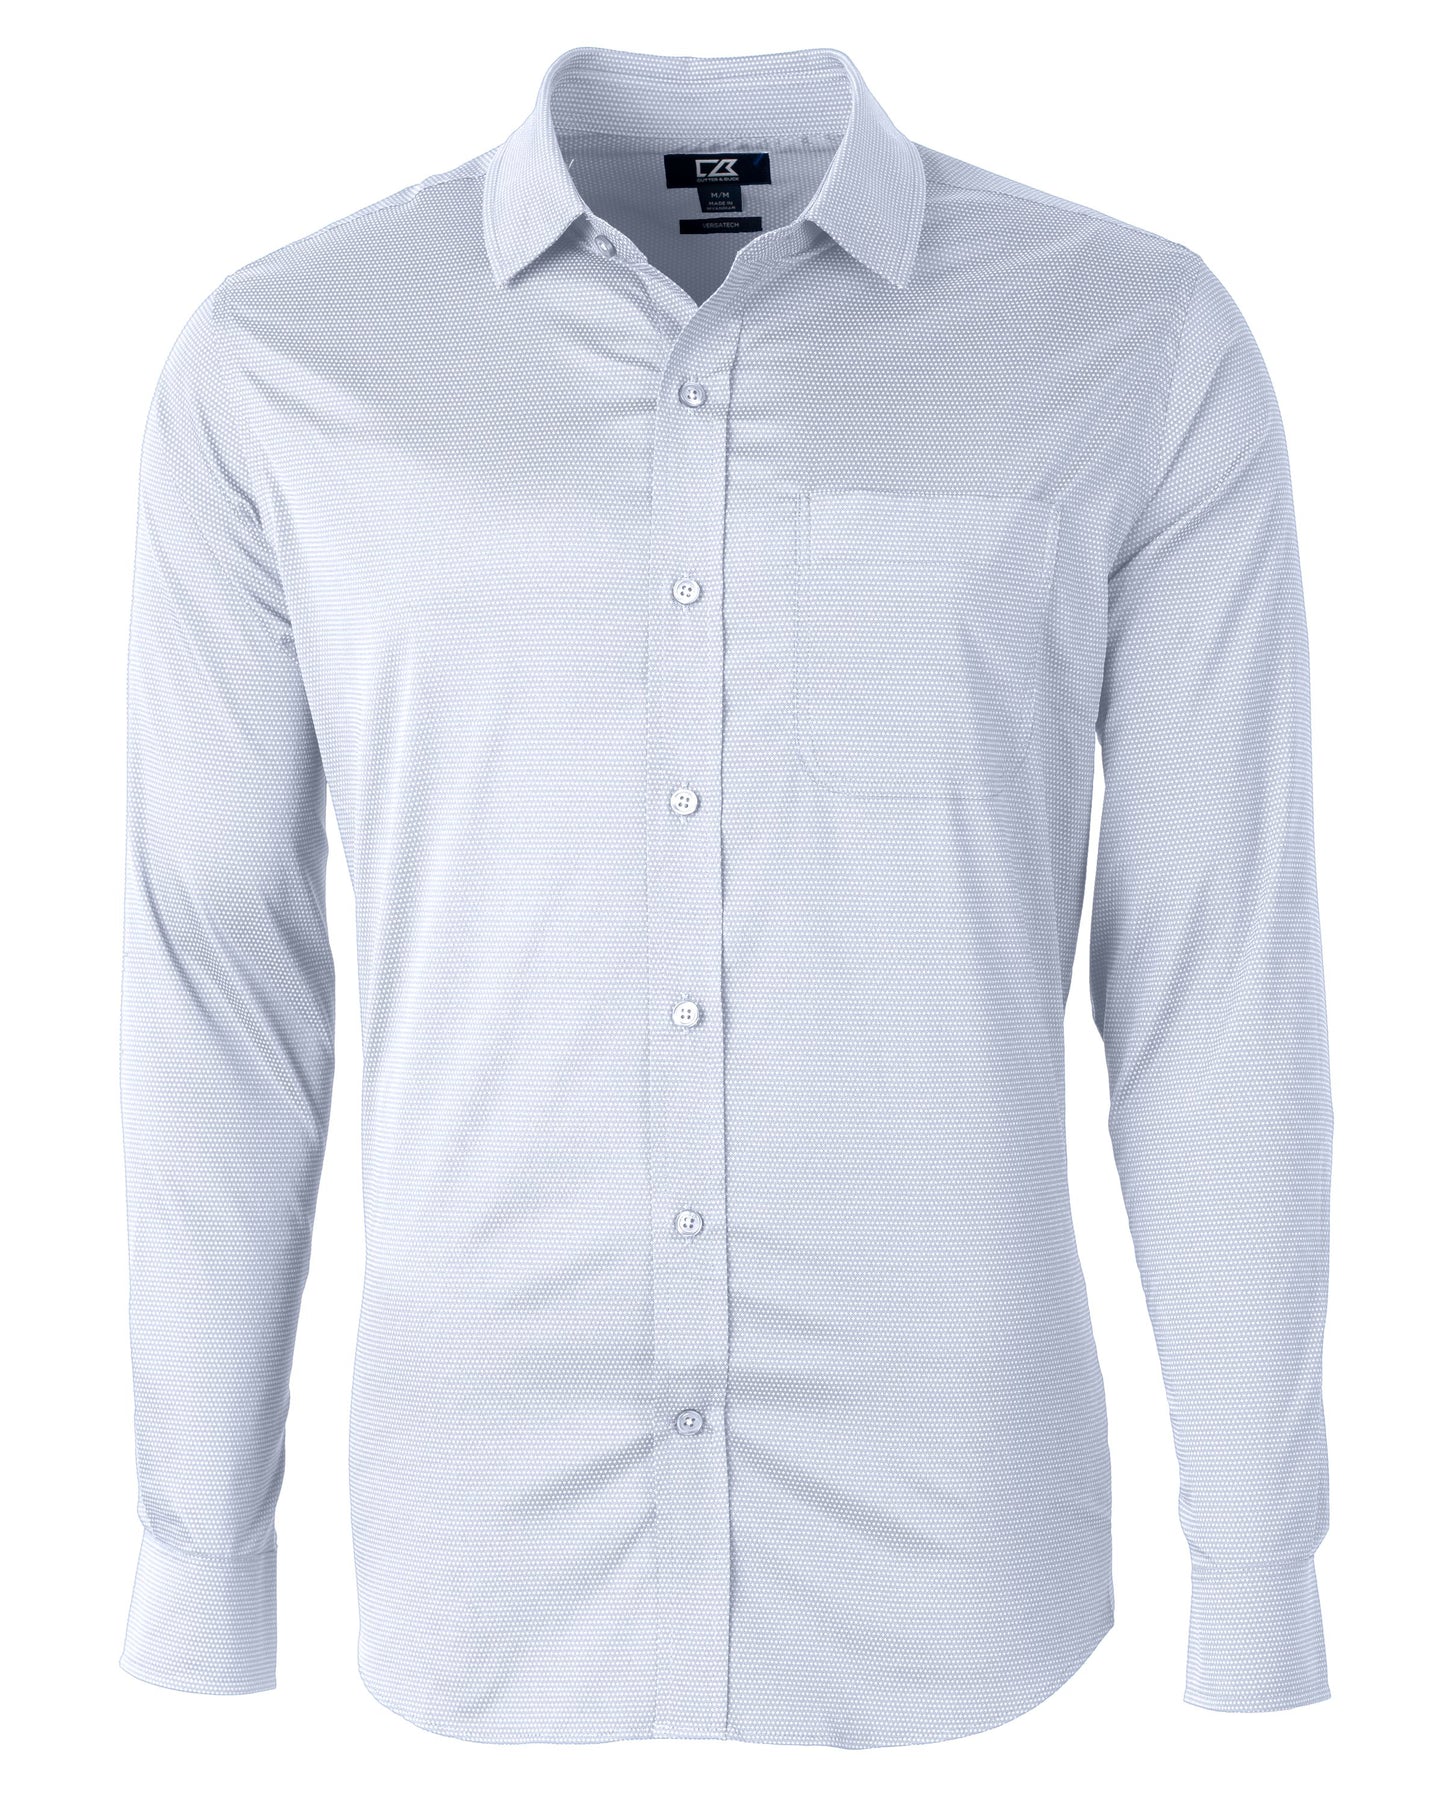 Cutter & Buck Versatech Geo Dobby Stretch Dress Shirt White/French Blue